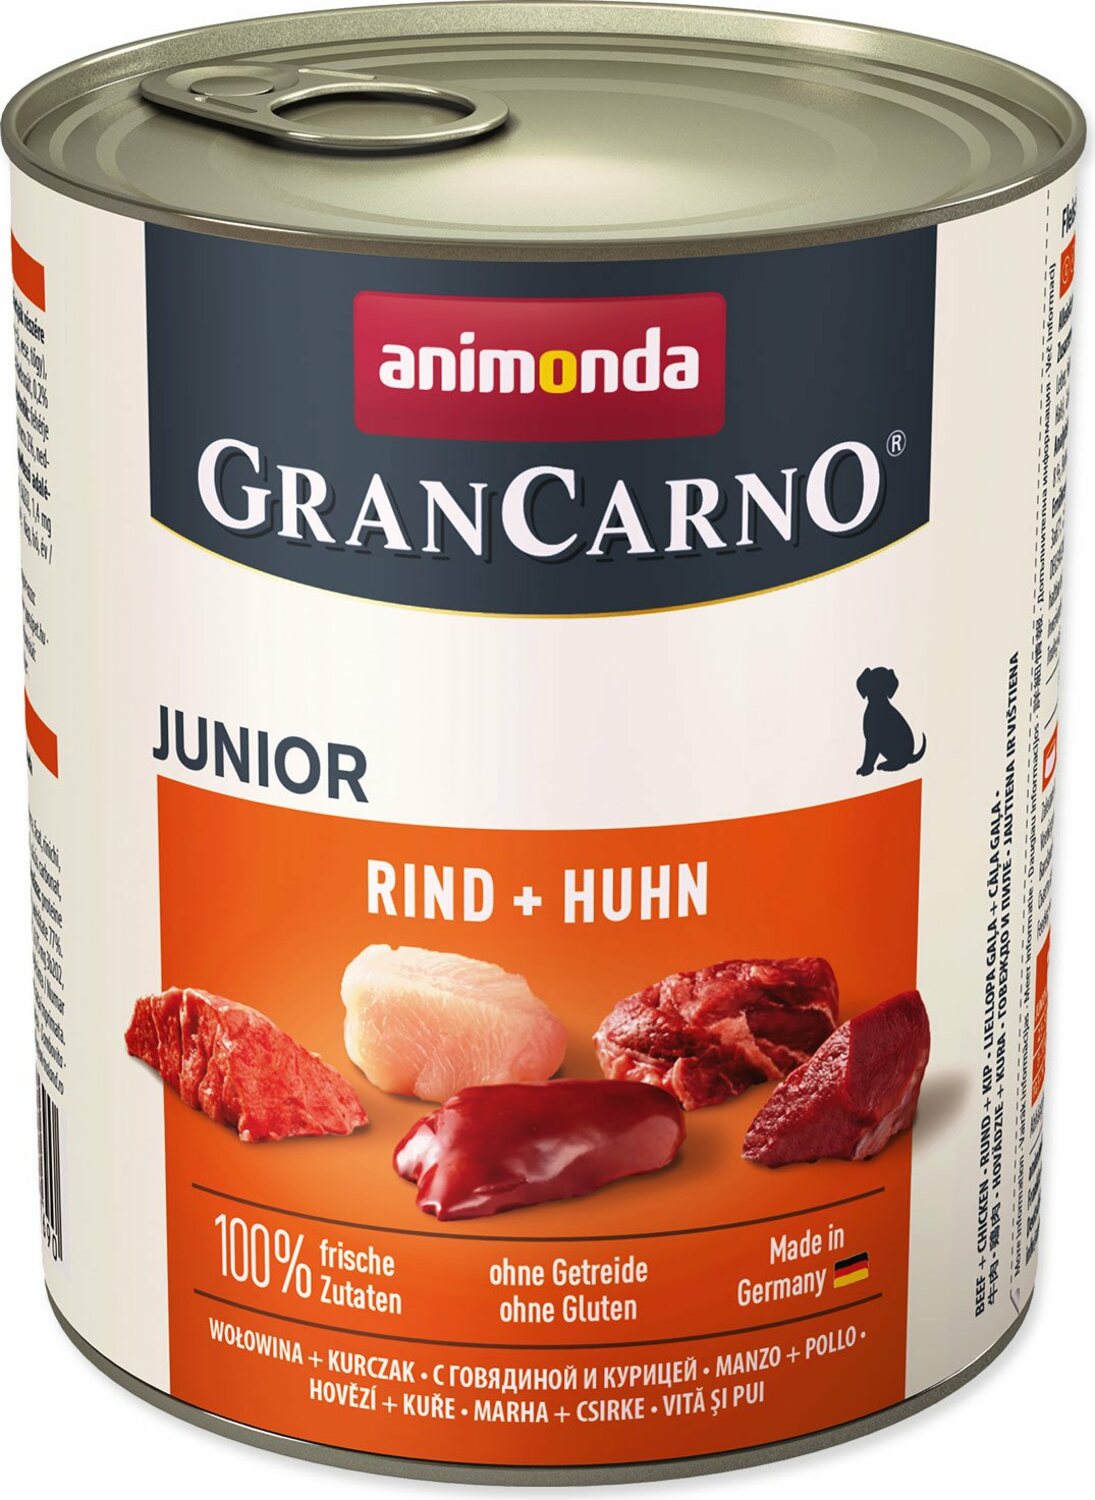 Konzerva Animonda Gran Carno Junior hovězí a kuře 800g